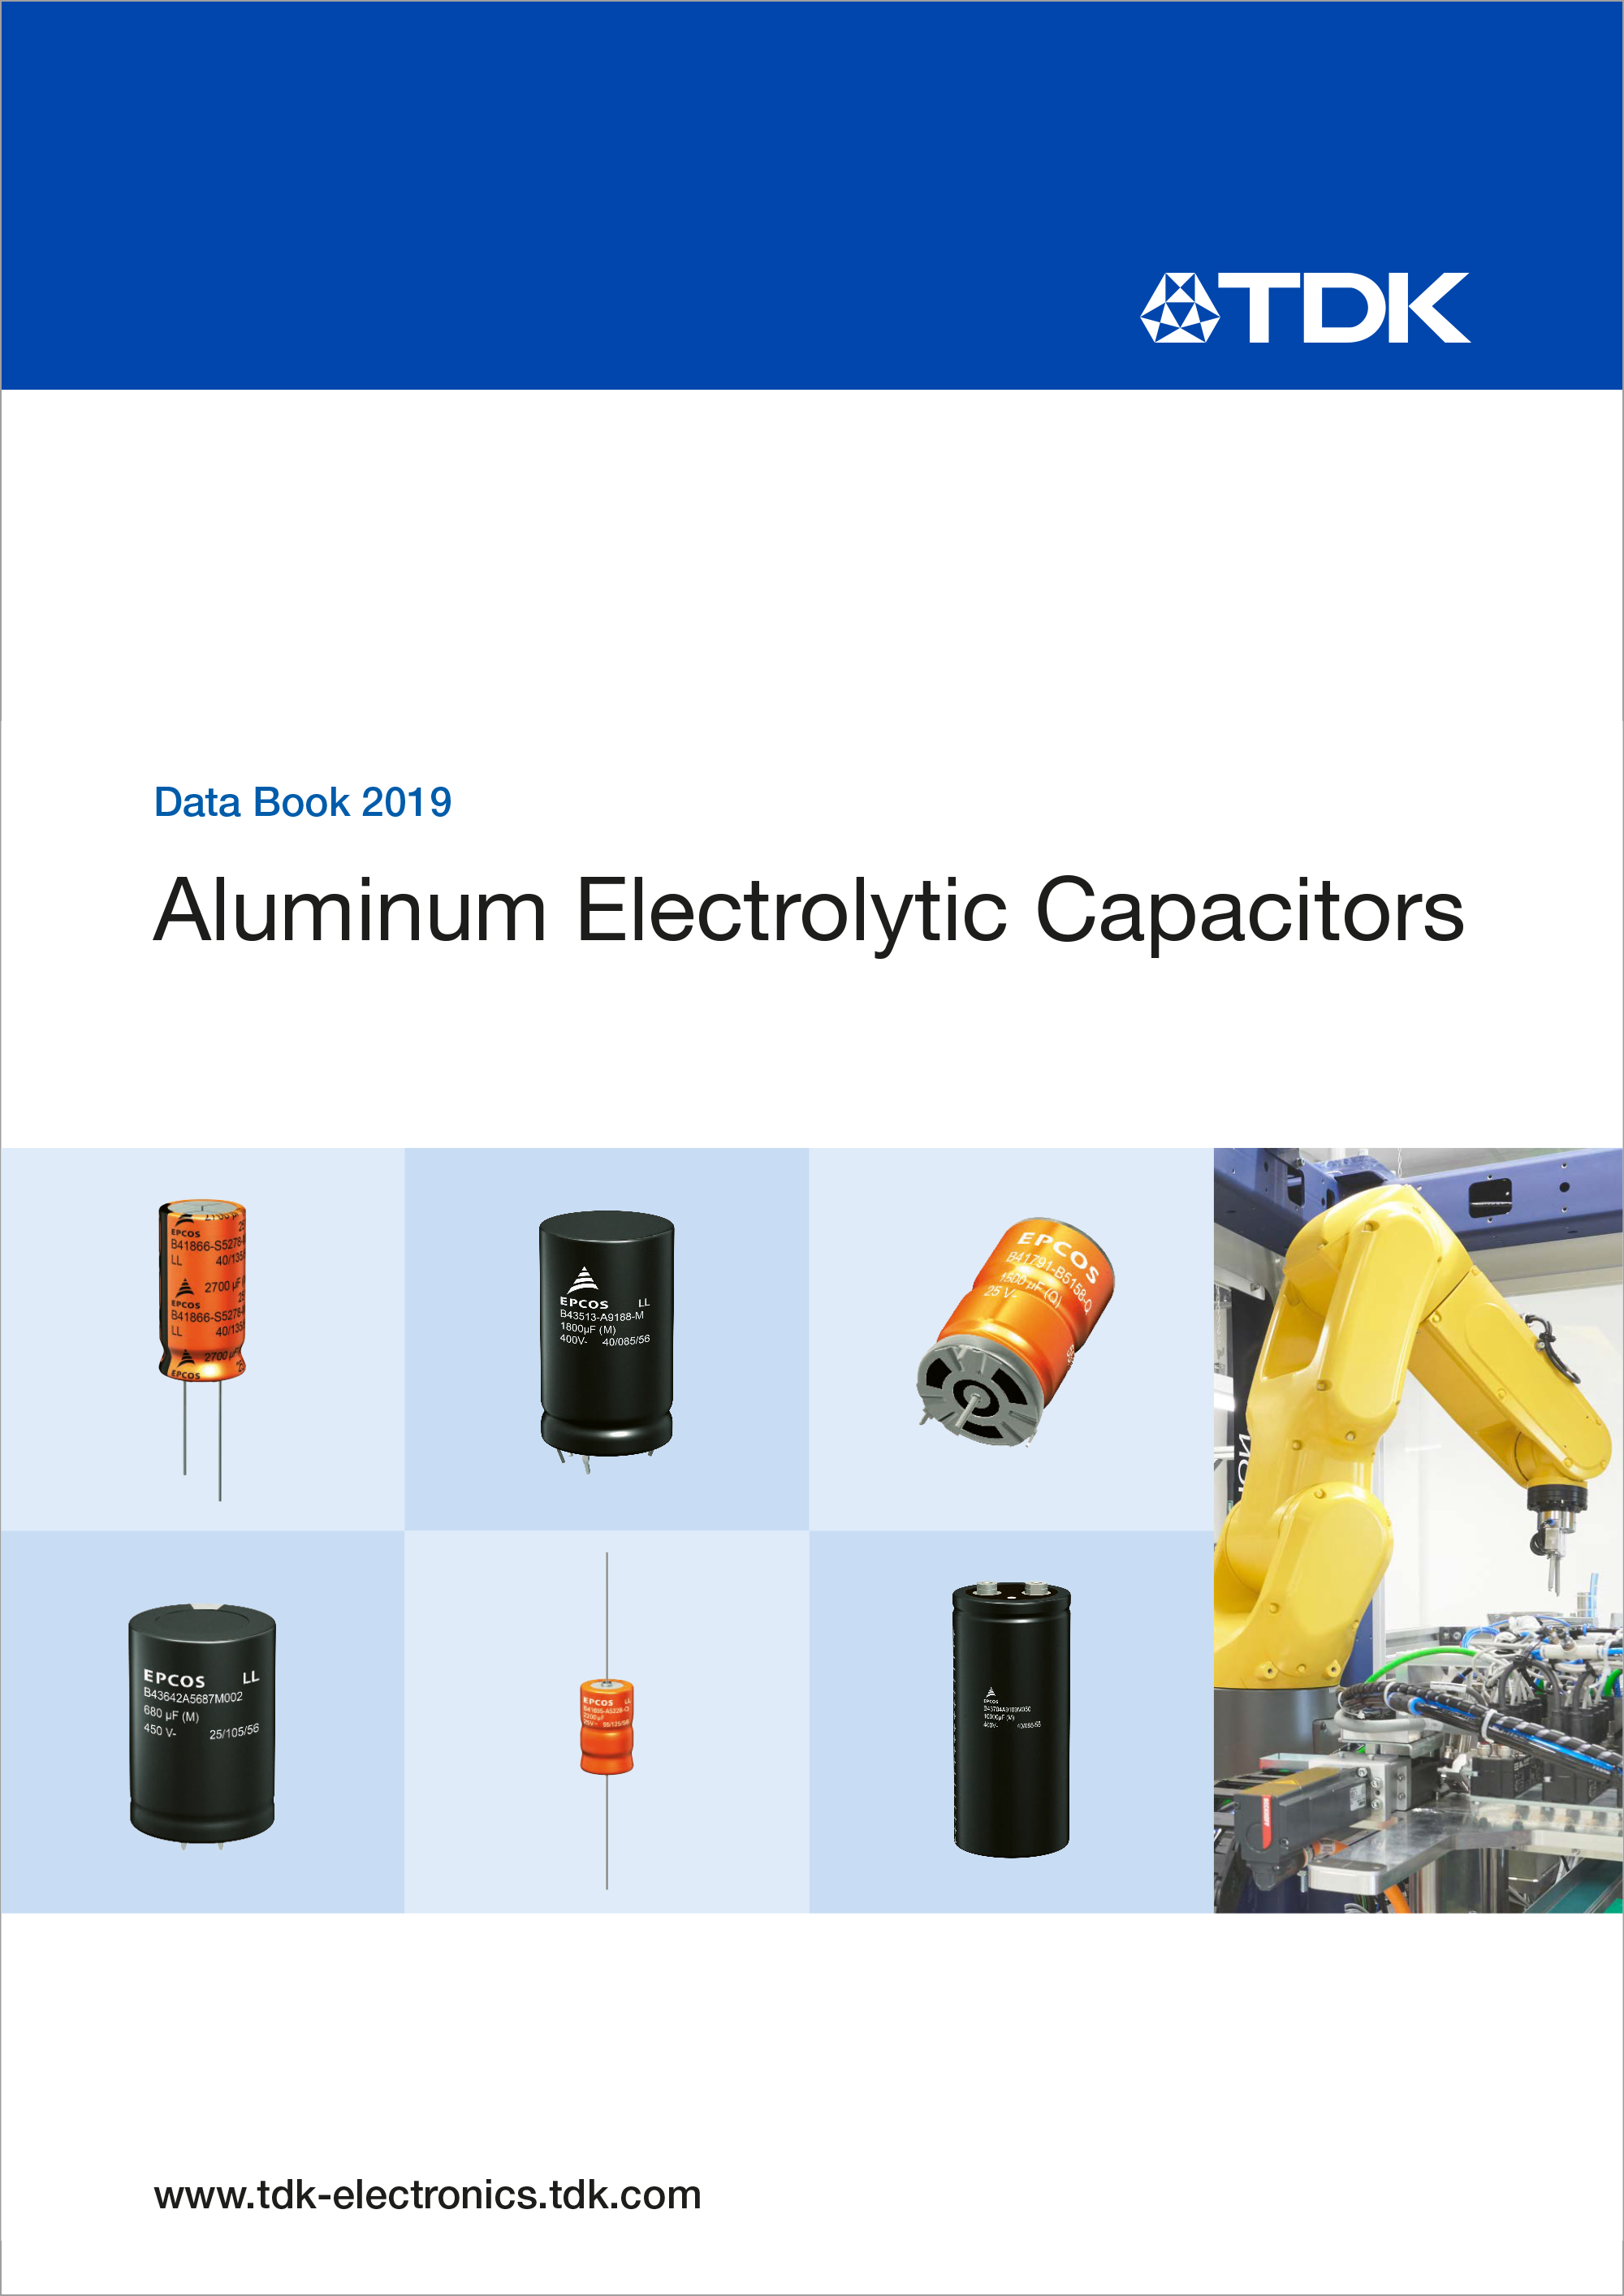 New Data Book for Aluminum Electrolytic Capacitors